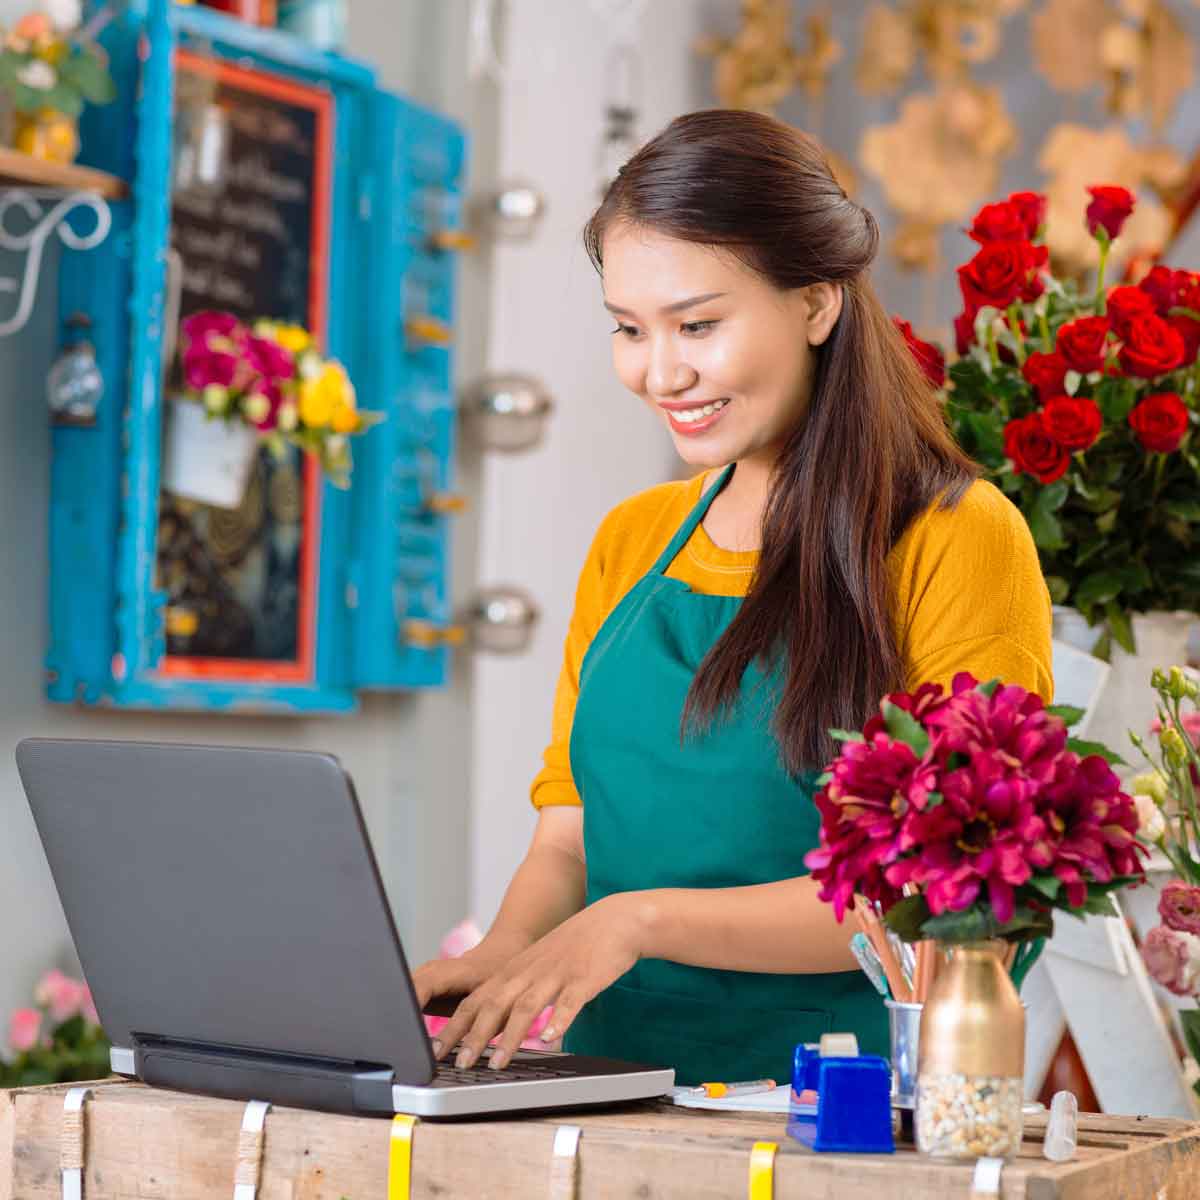 Business owner on computer in her floral design shop